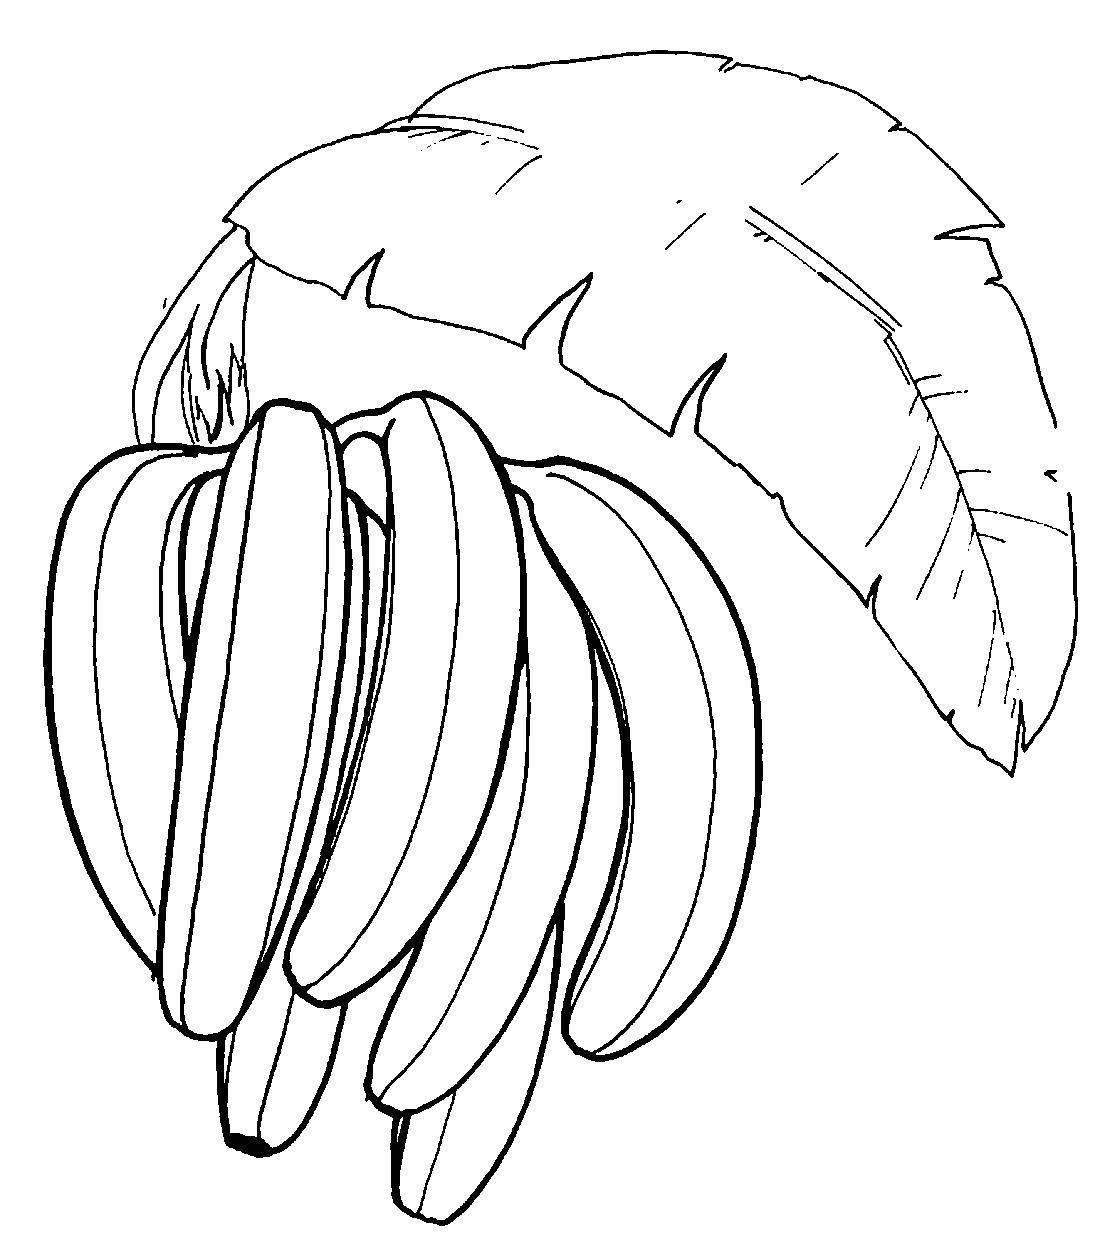 Название: Раскраска Банаы. Категория: банан. Теги: фрукты, бананы.